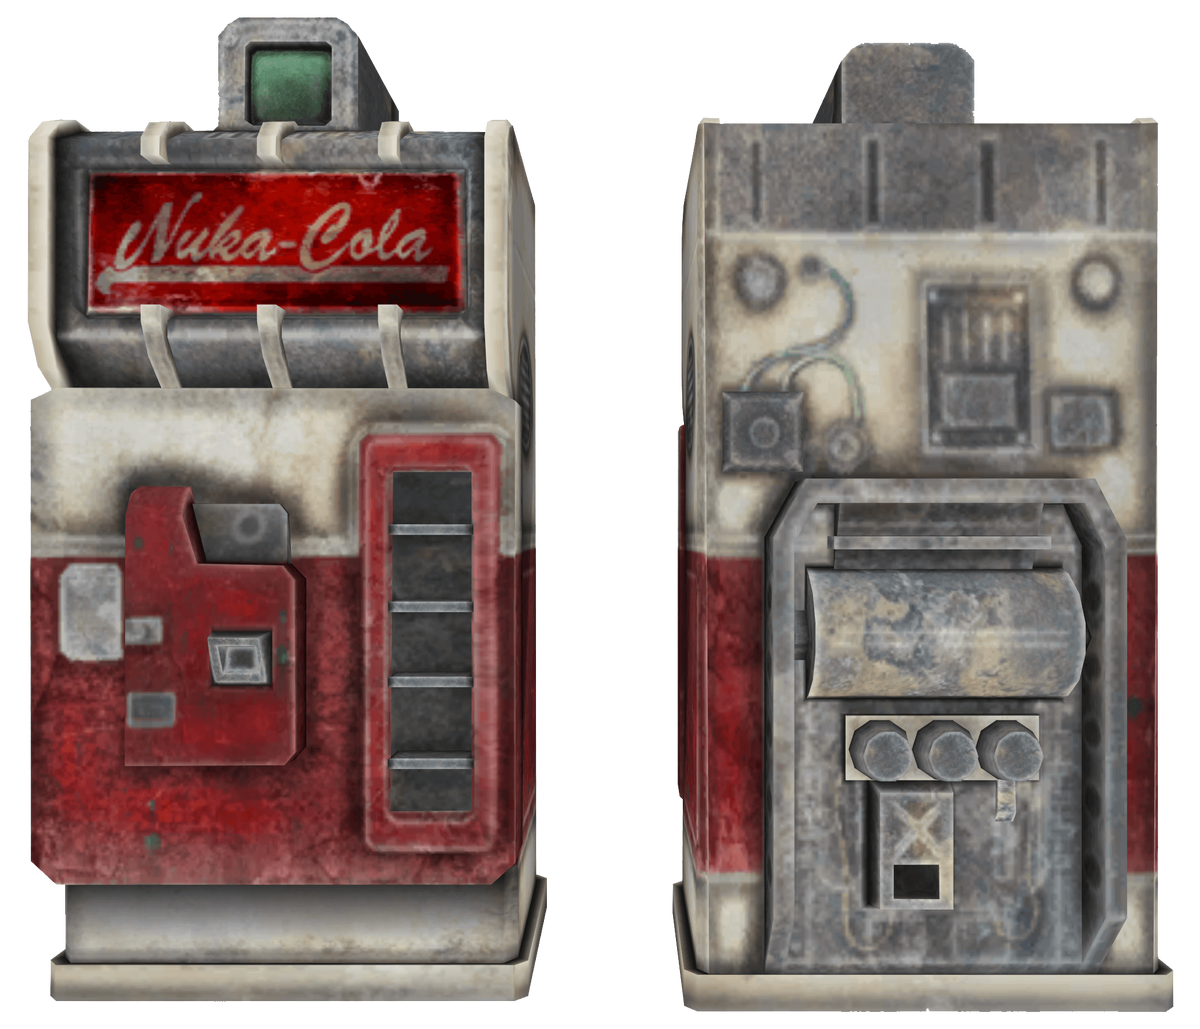 nuka-cola-vending-machine-fallout-3-the-vault-fallout-wiki